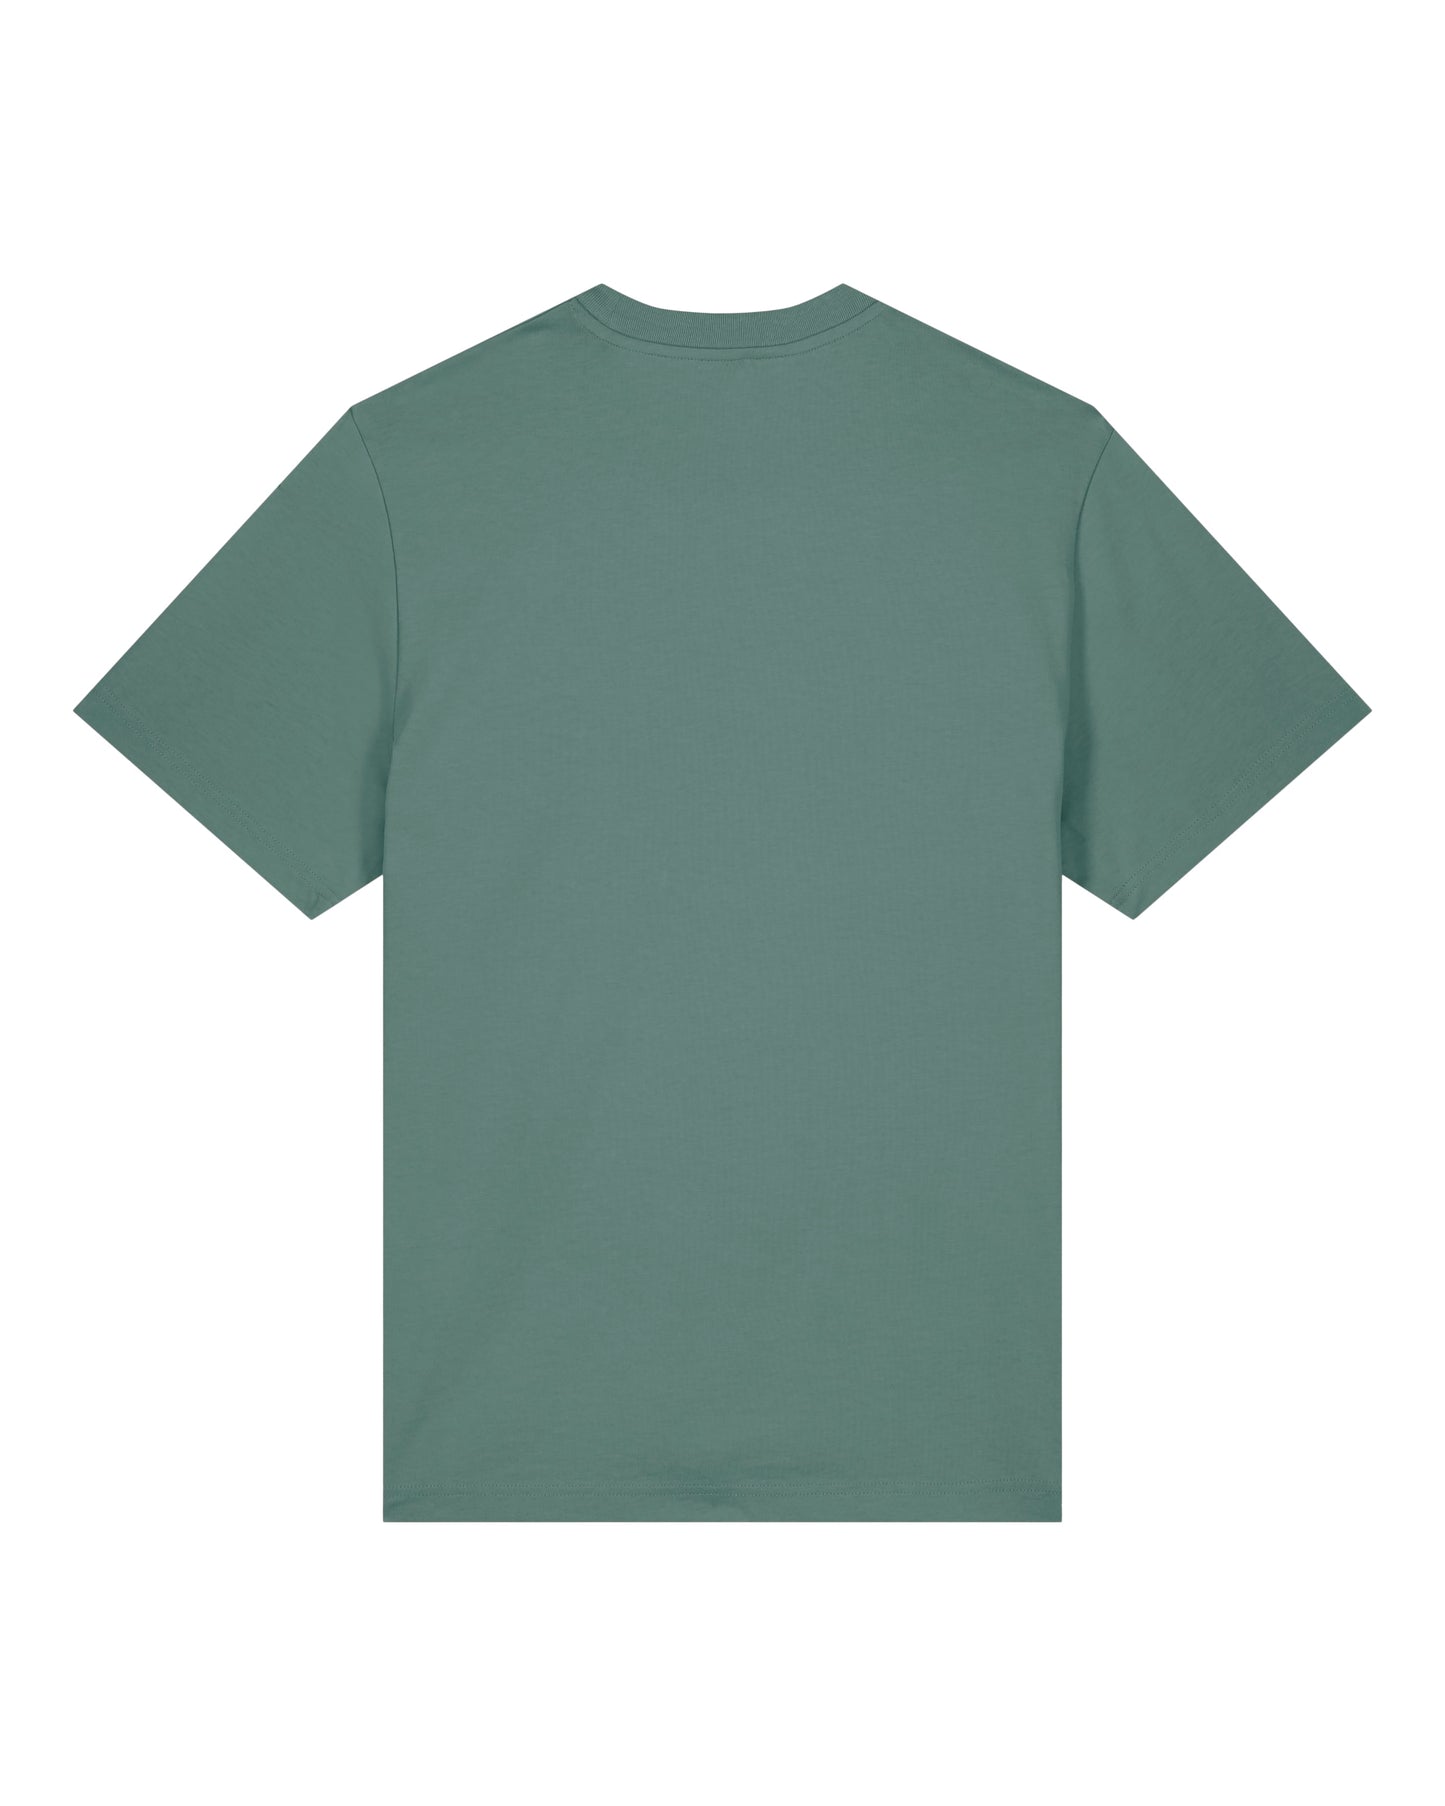 Tee shirt Essential - Green bay